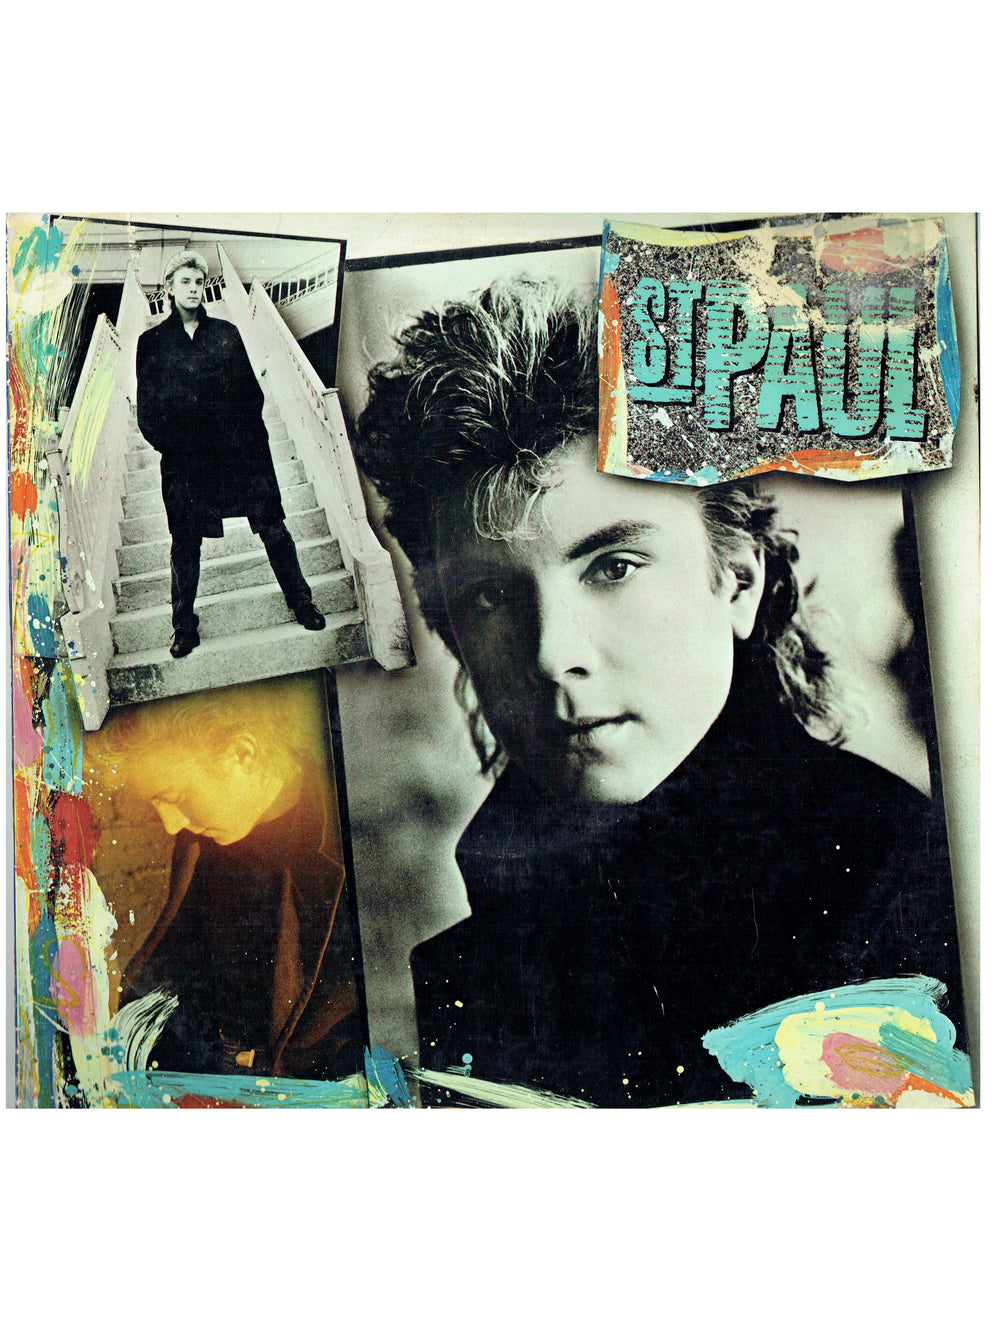 ST PAUL The Family Self Titled Original Vinyl Album 1987 US 8 Tracks Prince SMS